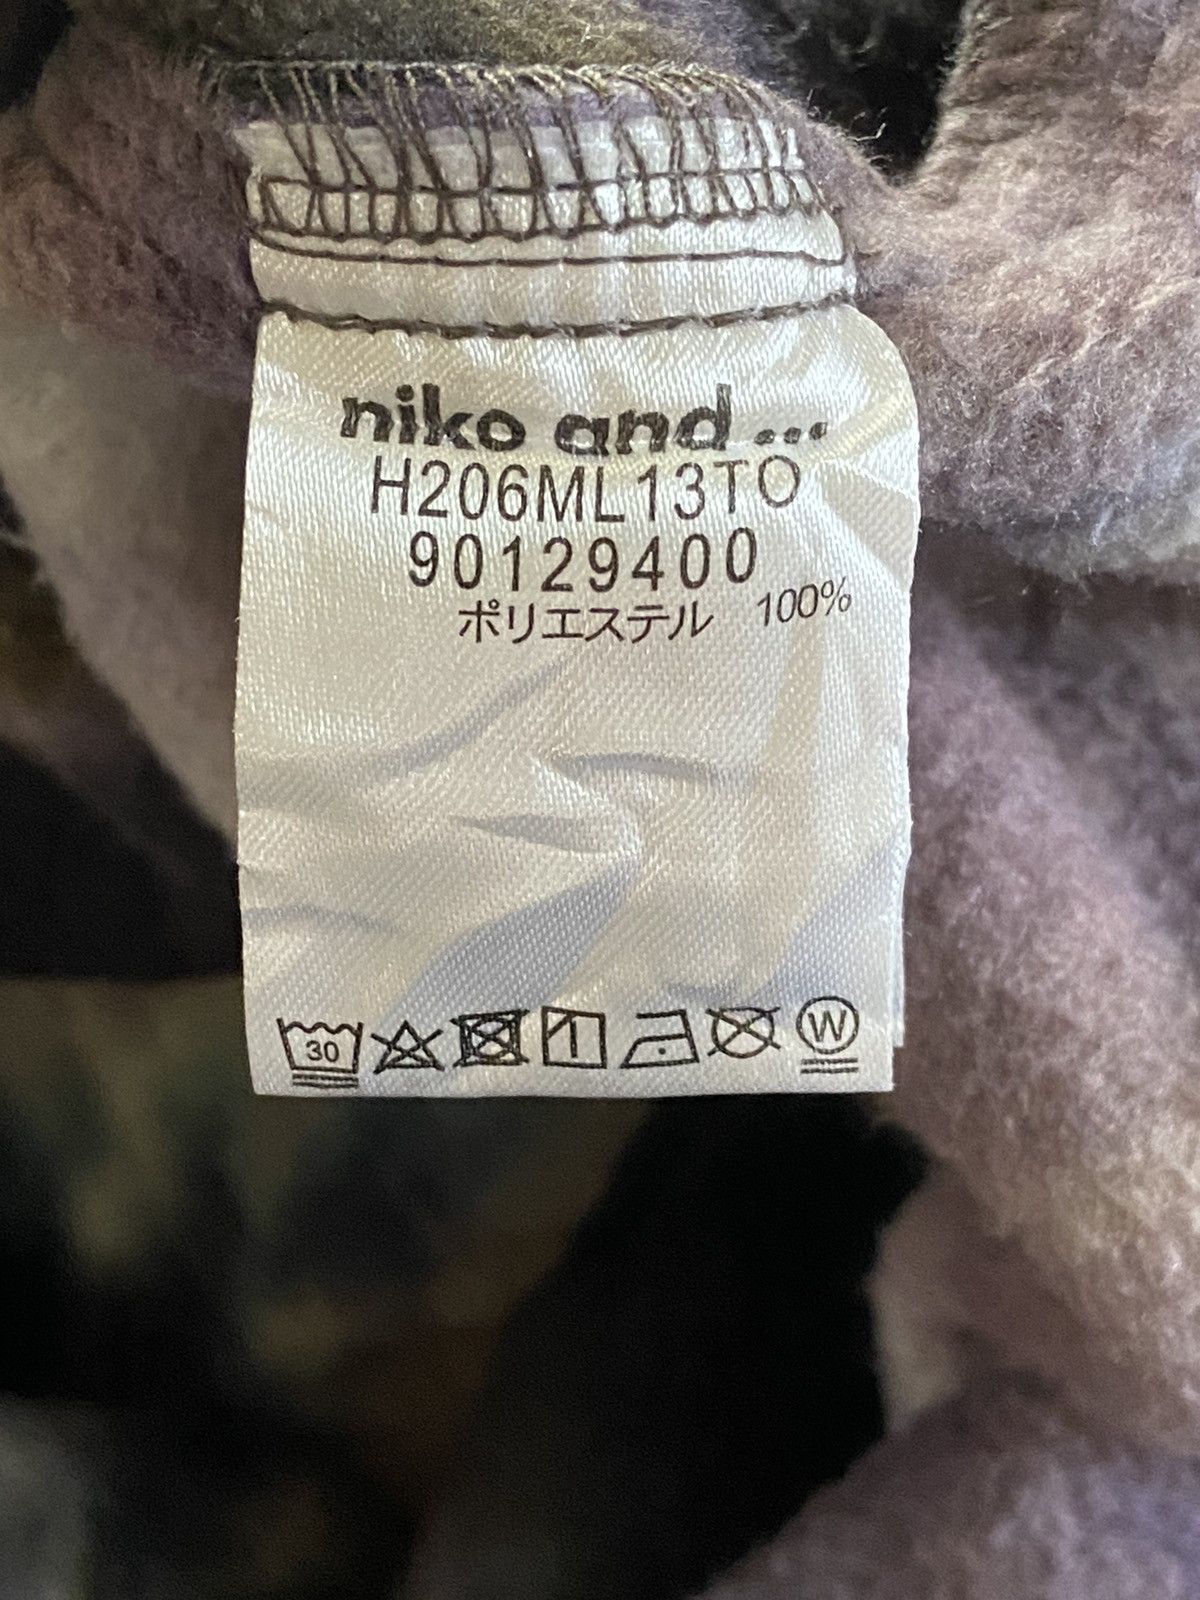 Japanese Brand - Niko and… Overalls Fleece Tie Dye - 5